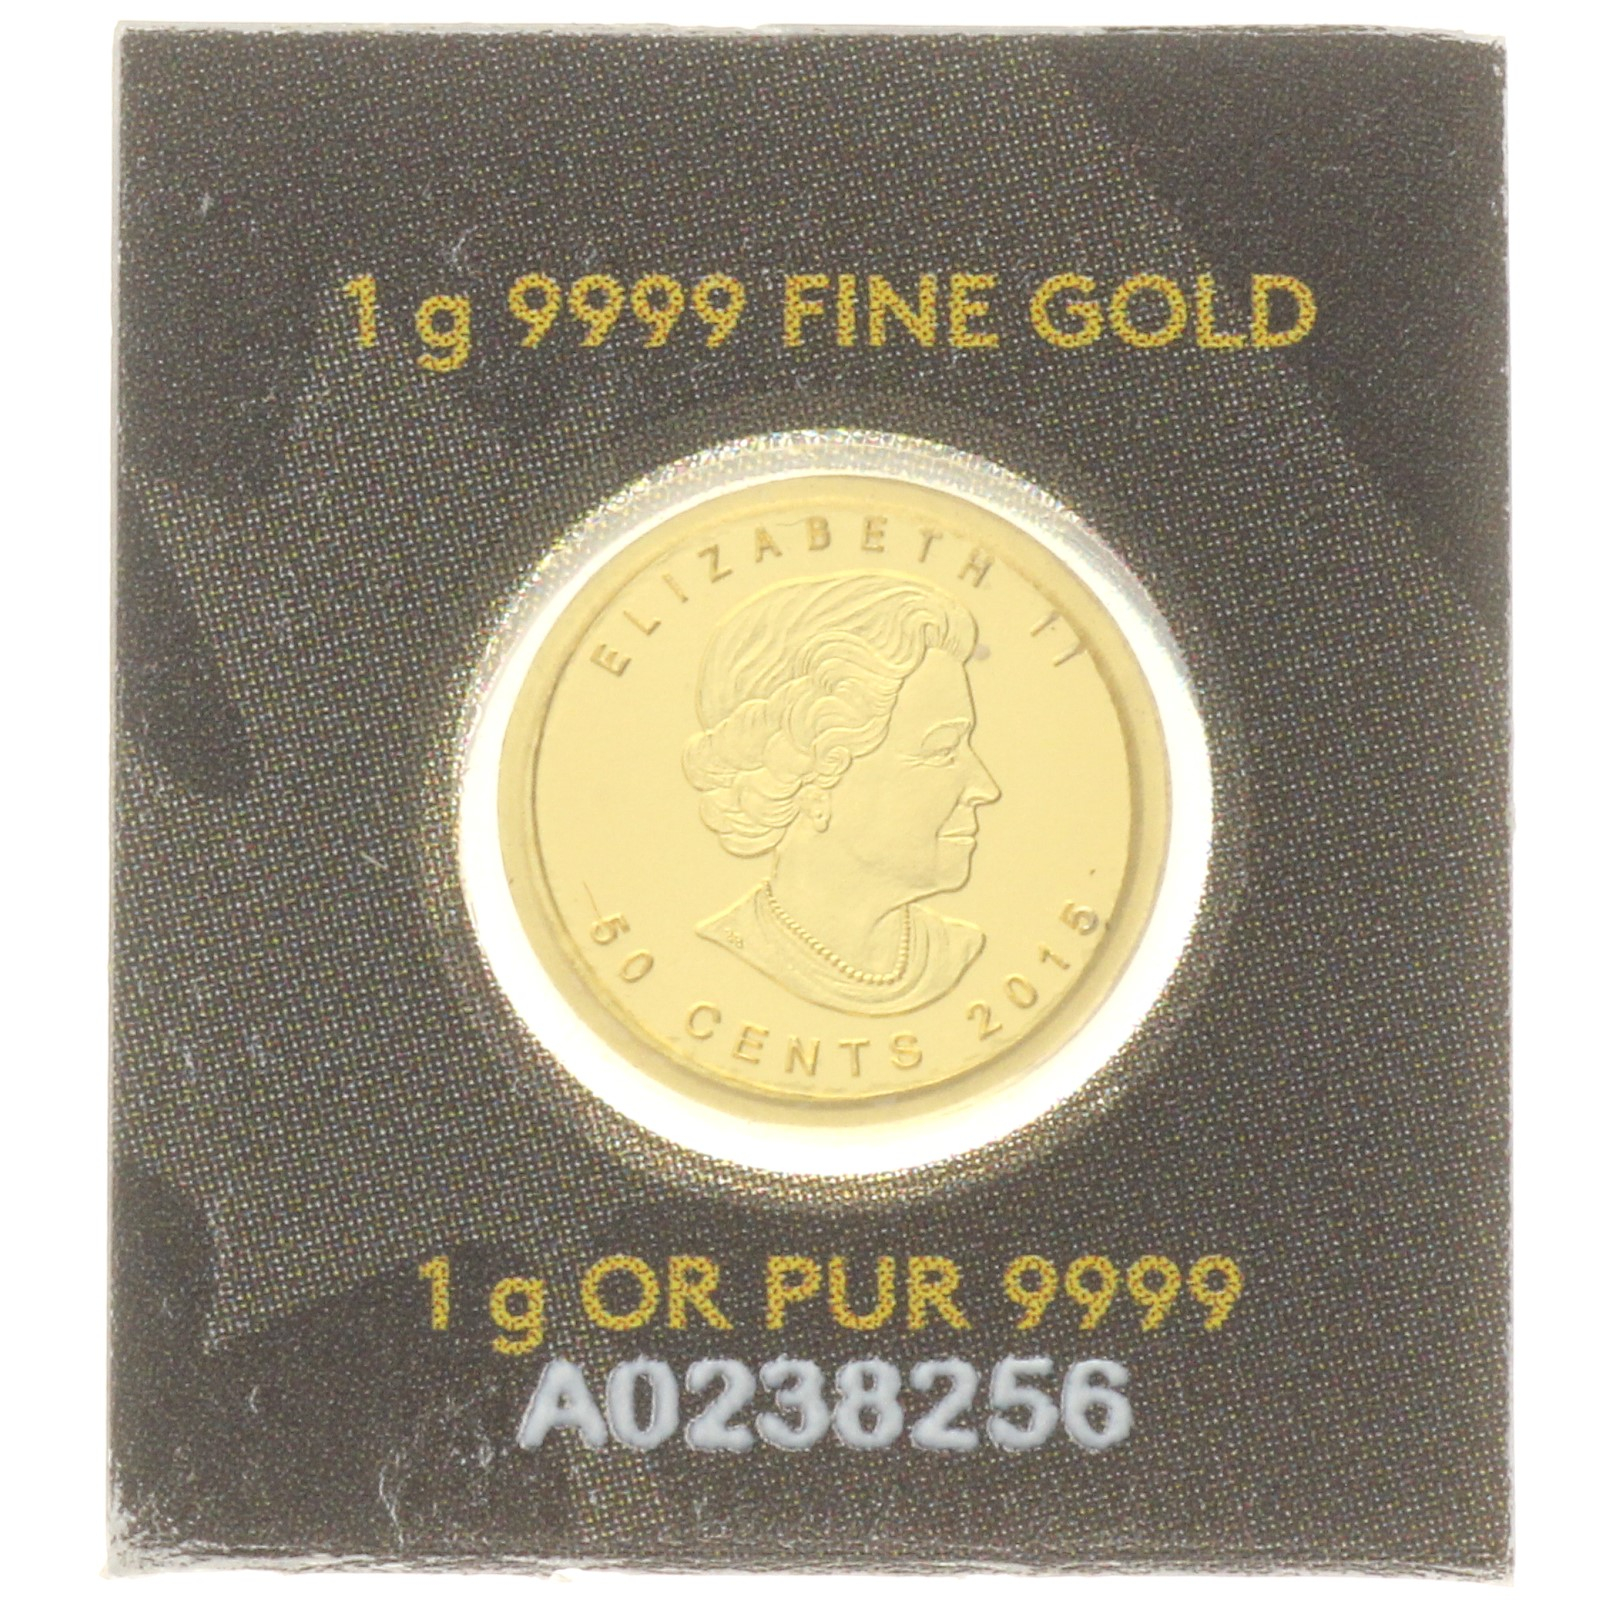 Canada - 50 cents - 2015 - Maple leaf - 1 gram